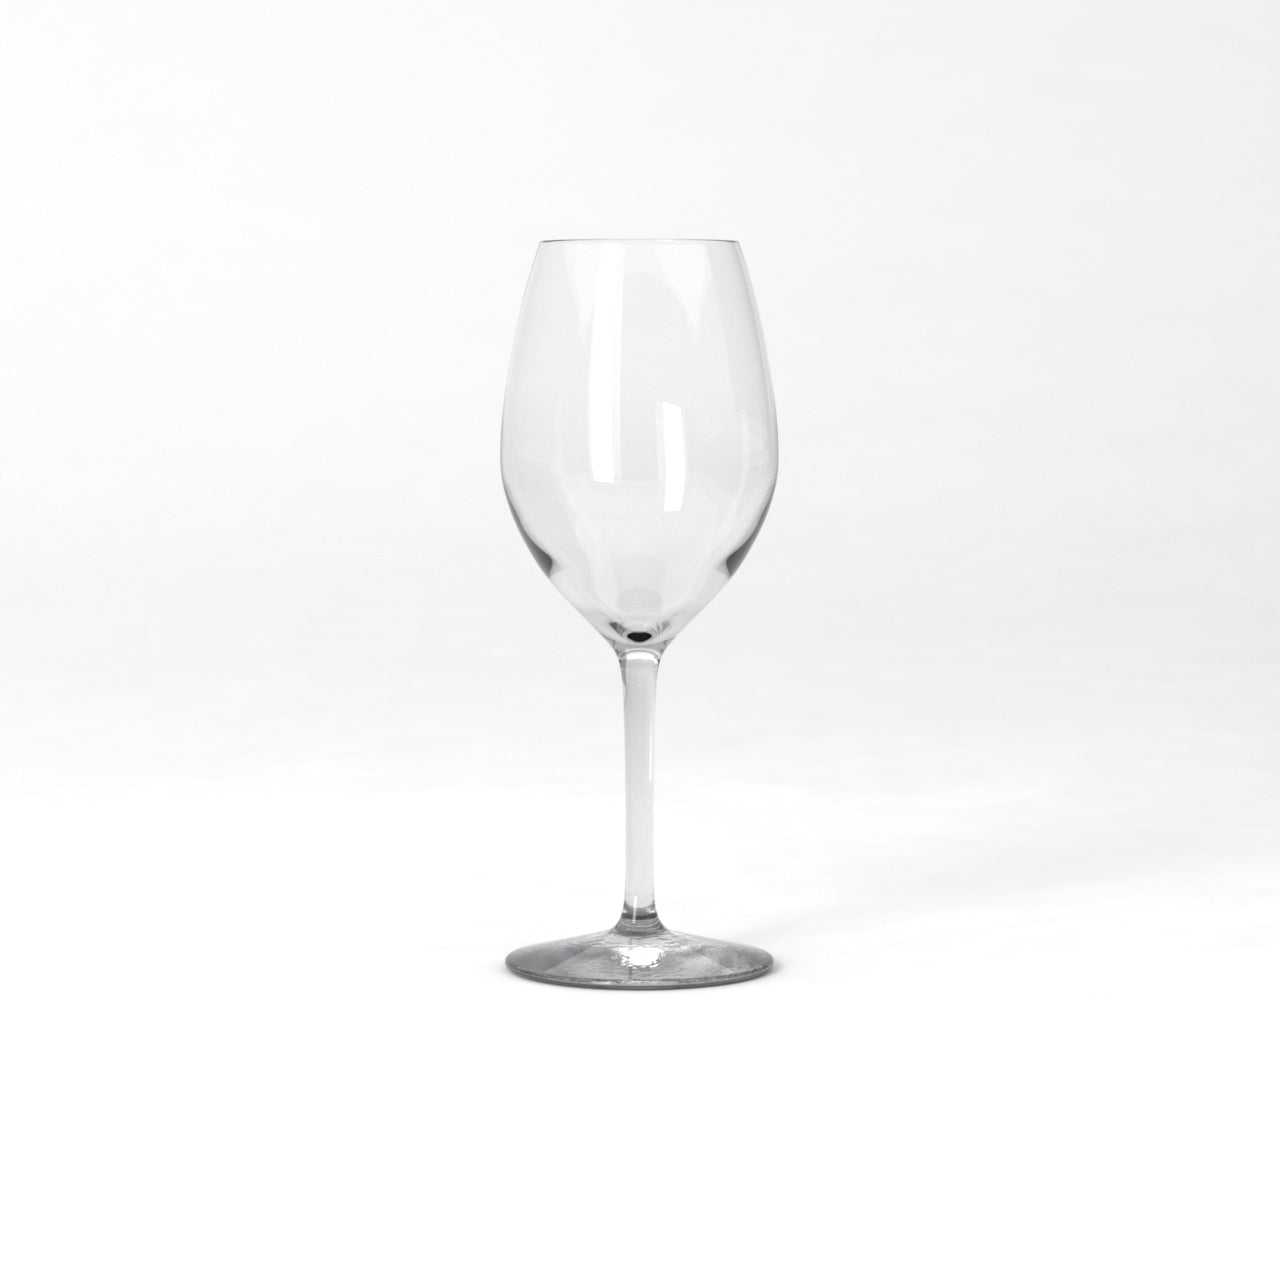 Senses Young white wine glass